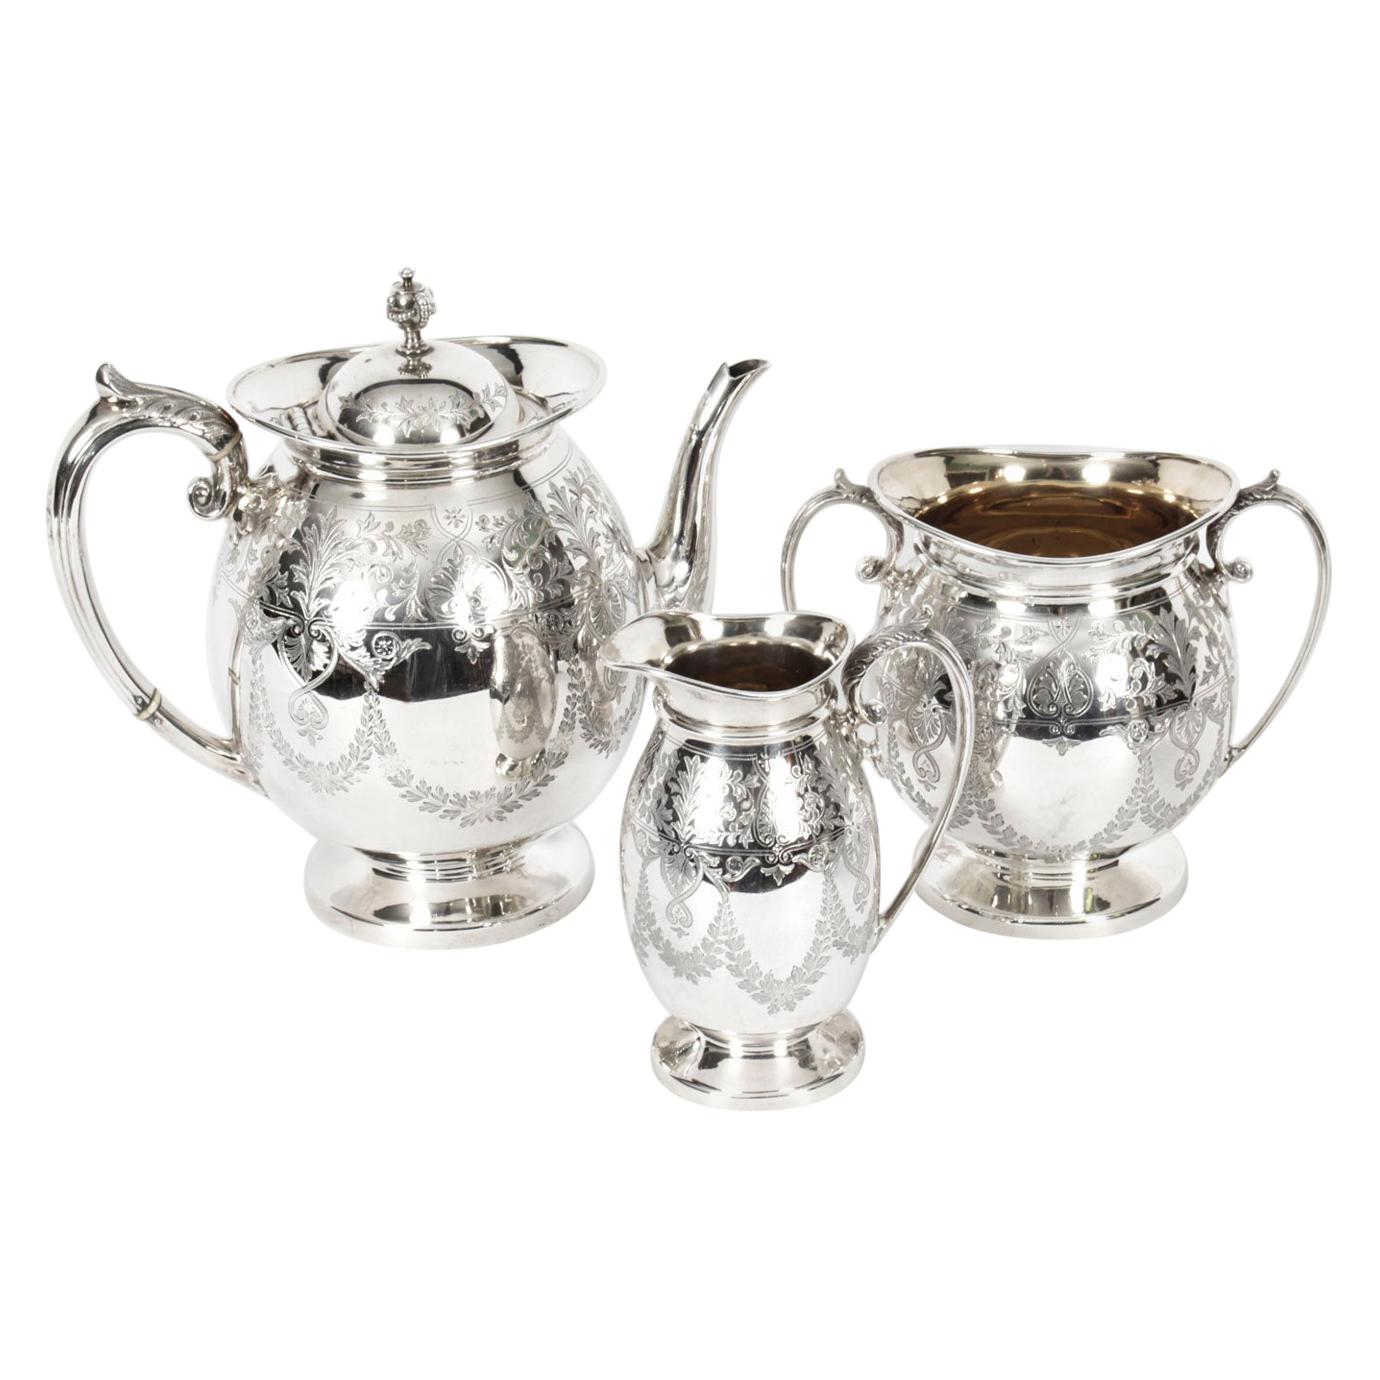 Antique Silver Plated Three Piece Tea Set Atkin Brothers, 19th Century